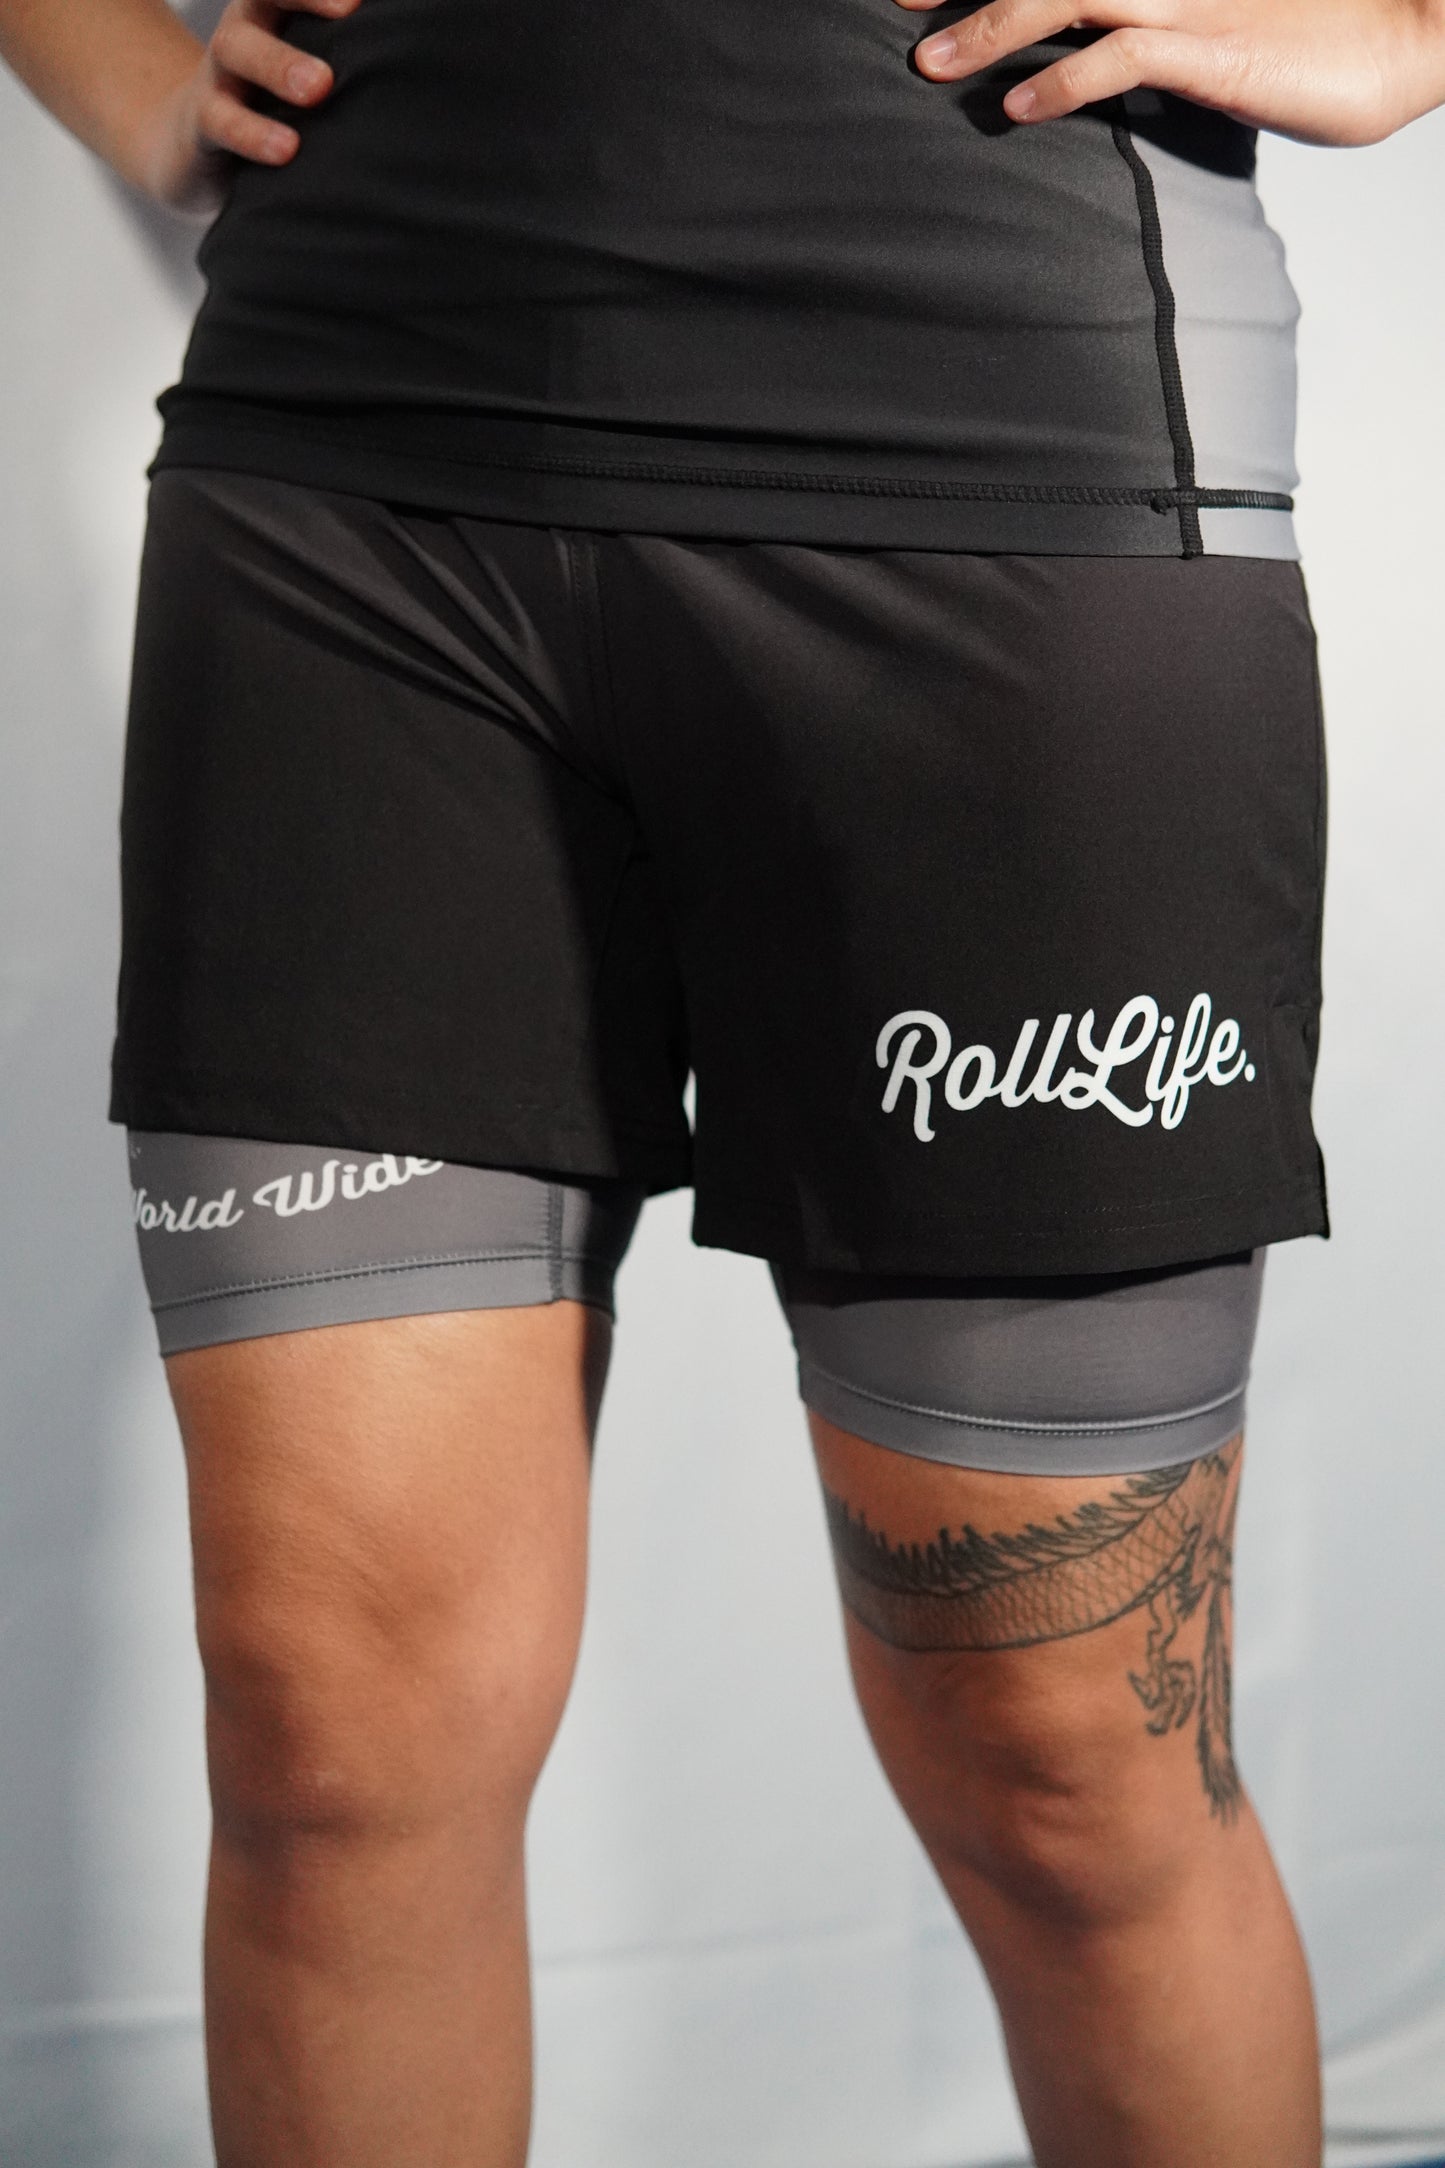 Roll Life "World" Shorts.